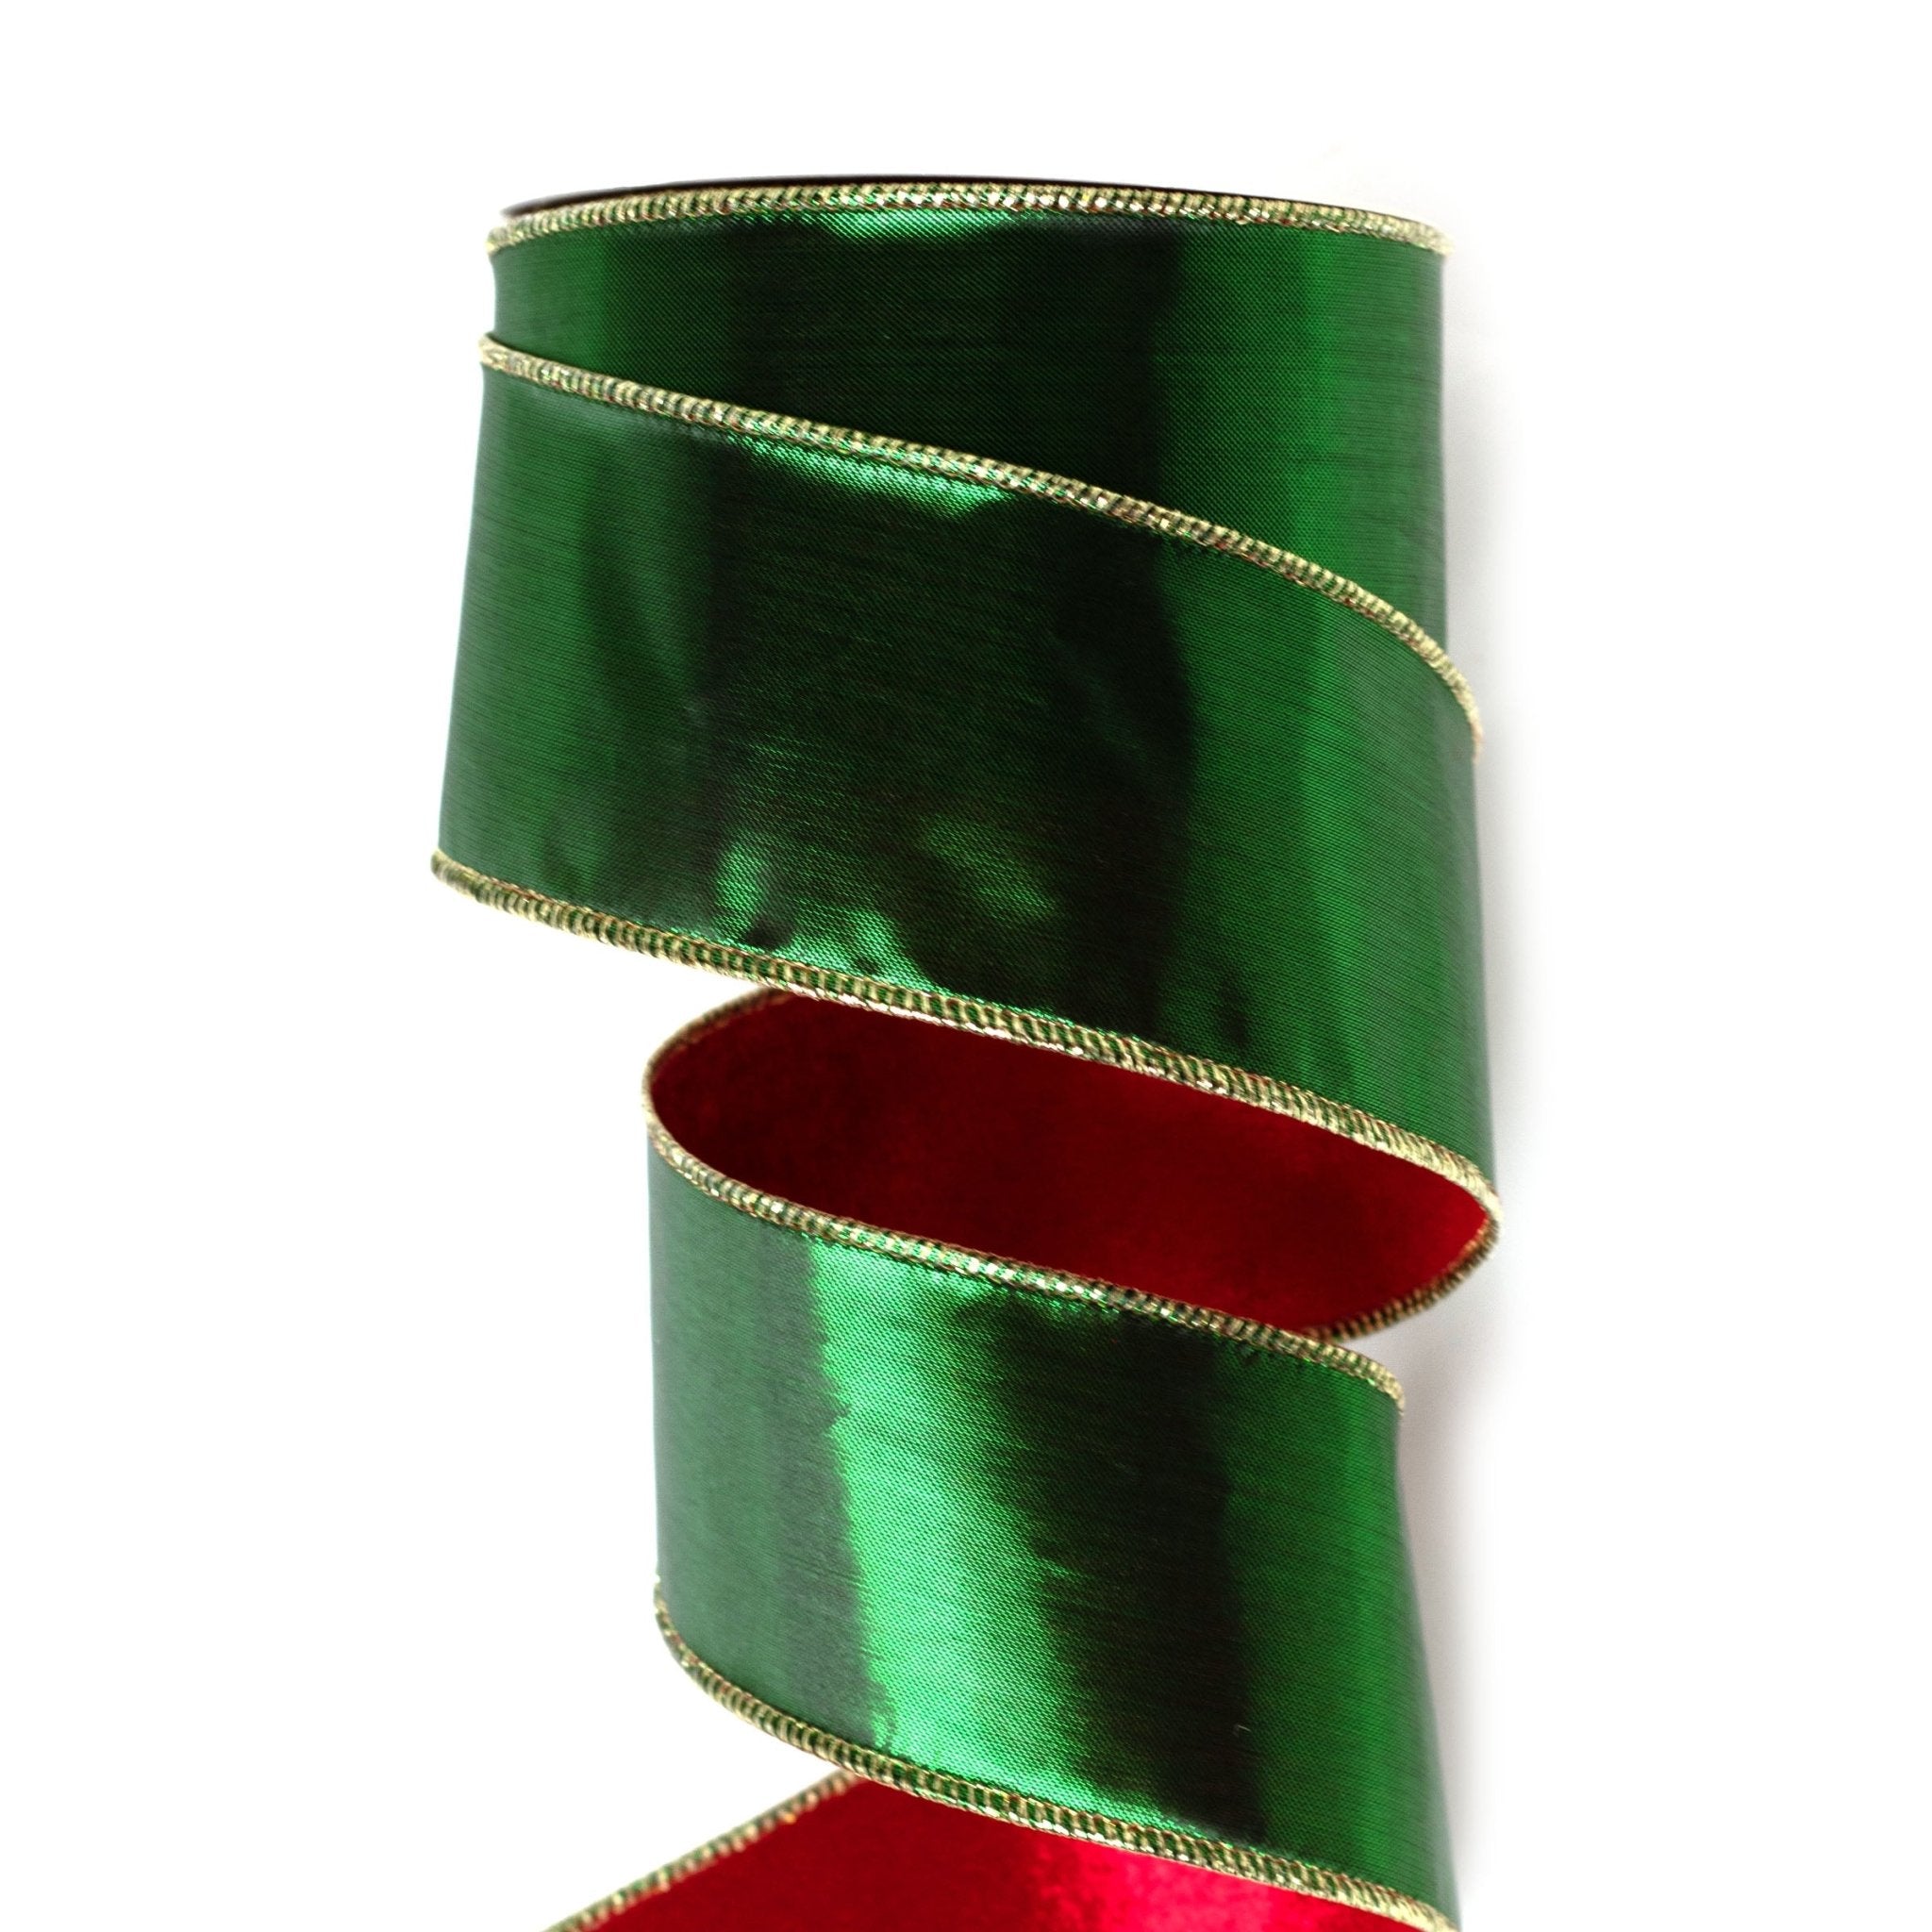 Dark Emerald Green Velvet Ribbon, 5/8 x 25 yards